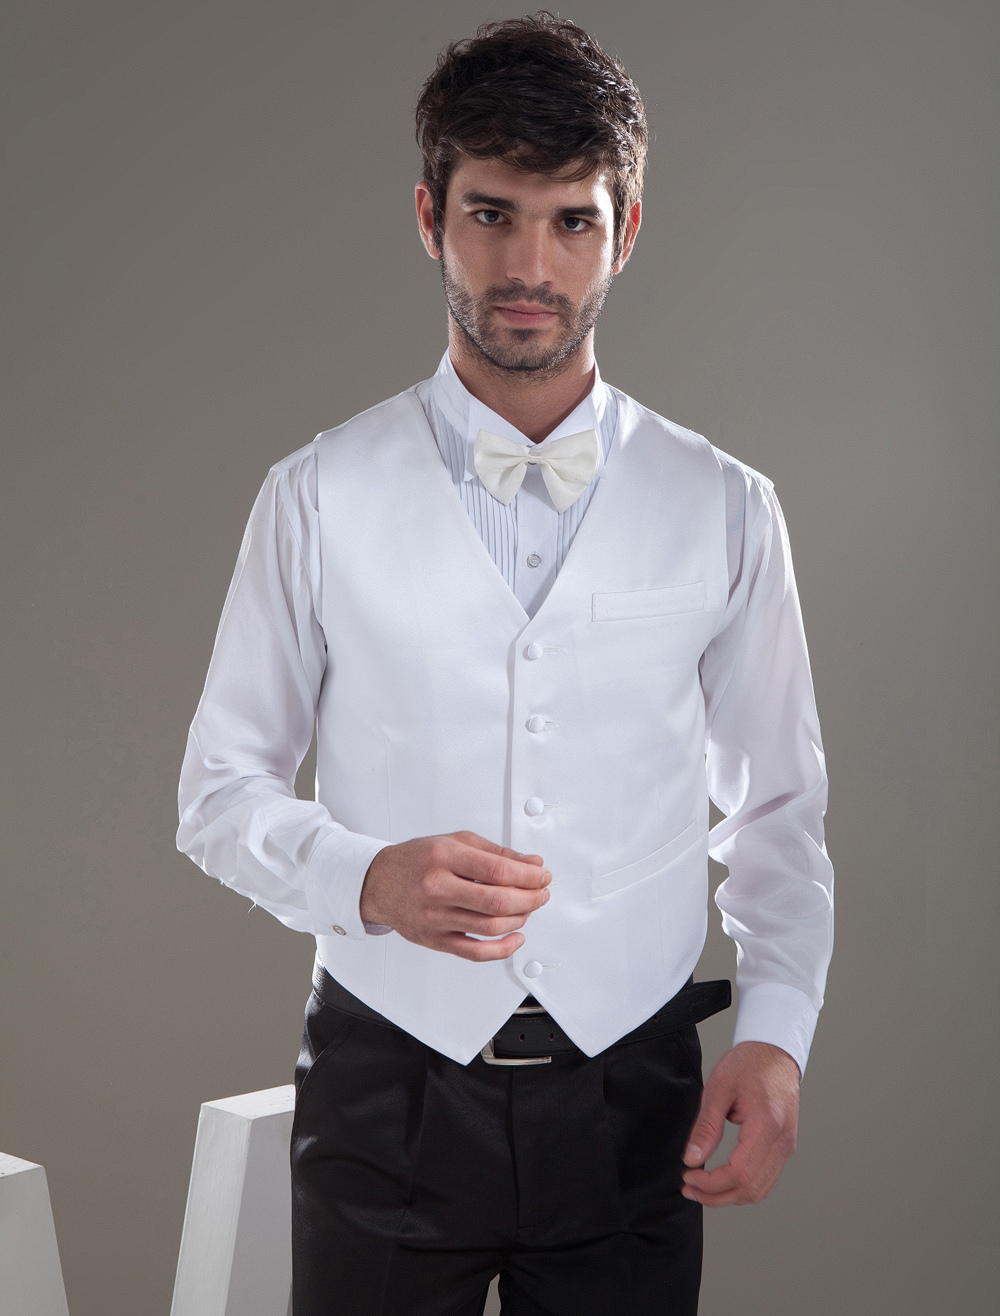 Traditional Men's Tuxedo - Milanoo.com